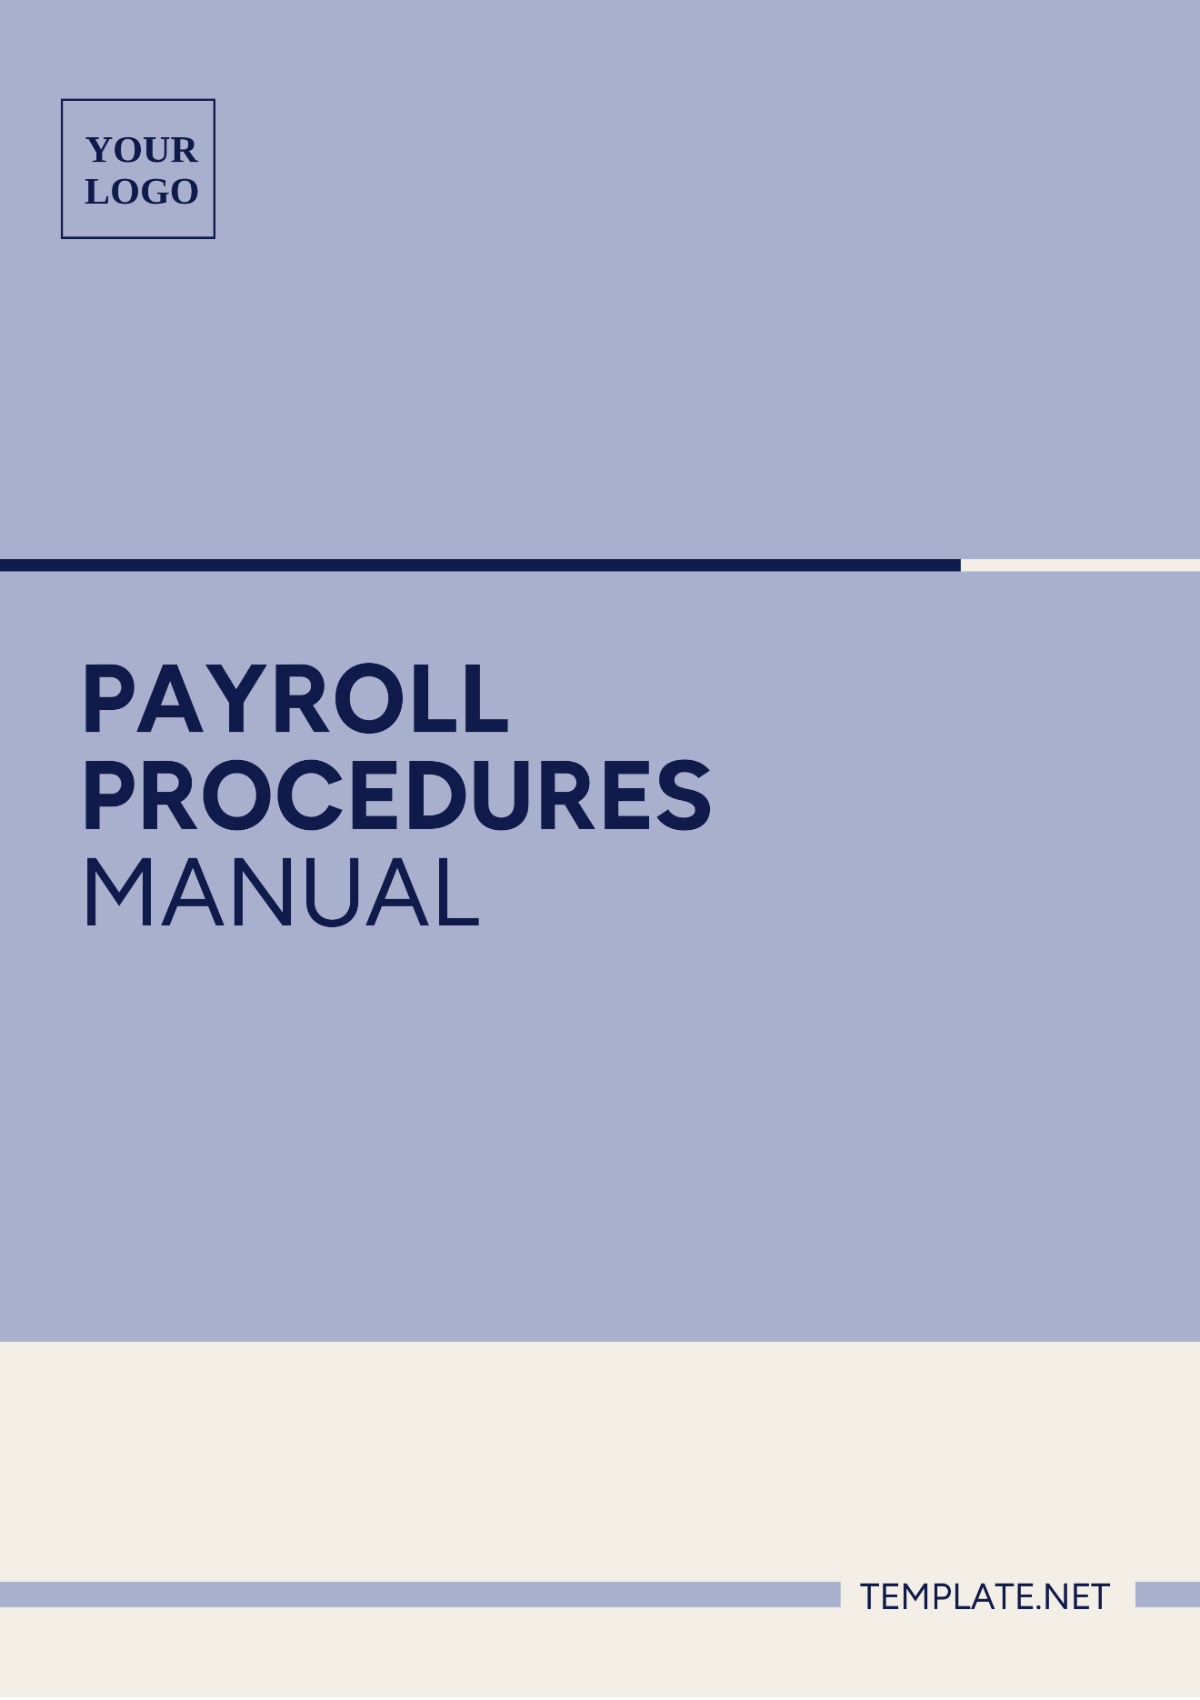 Payroll Procedures Manual Template